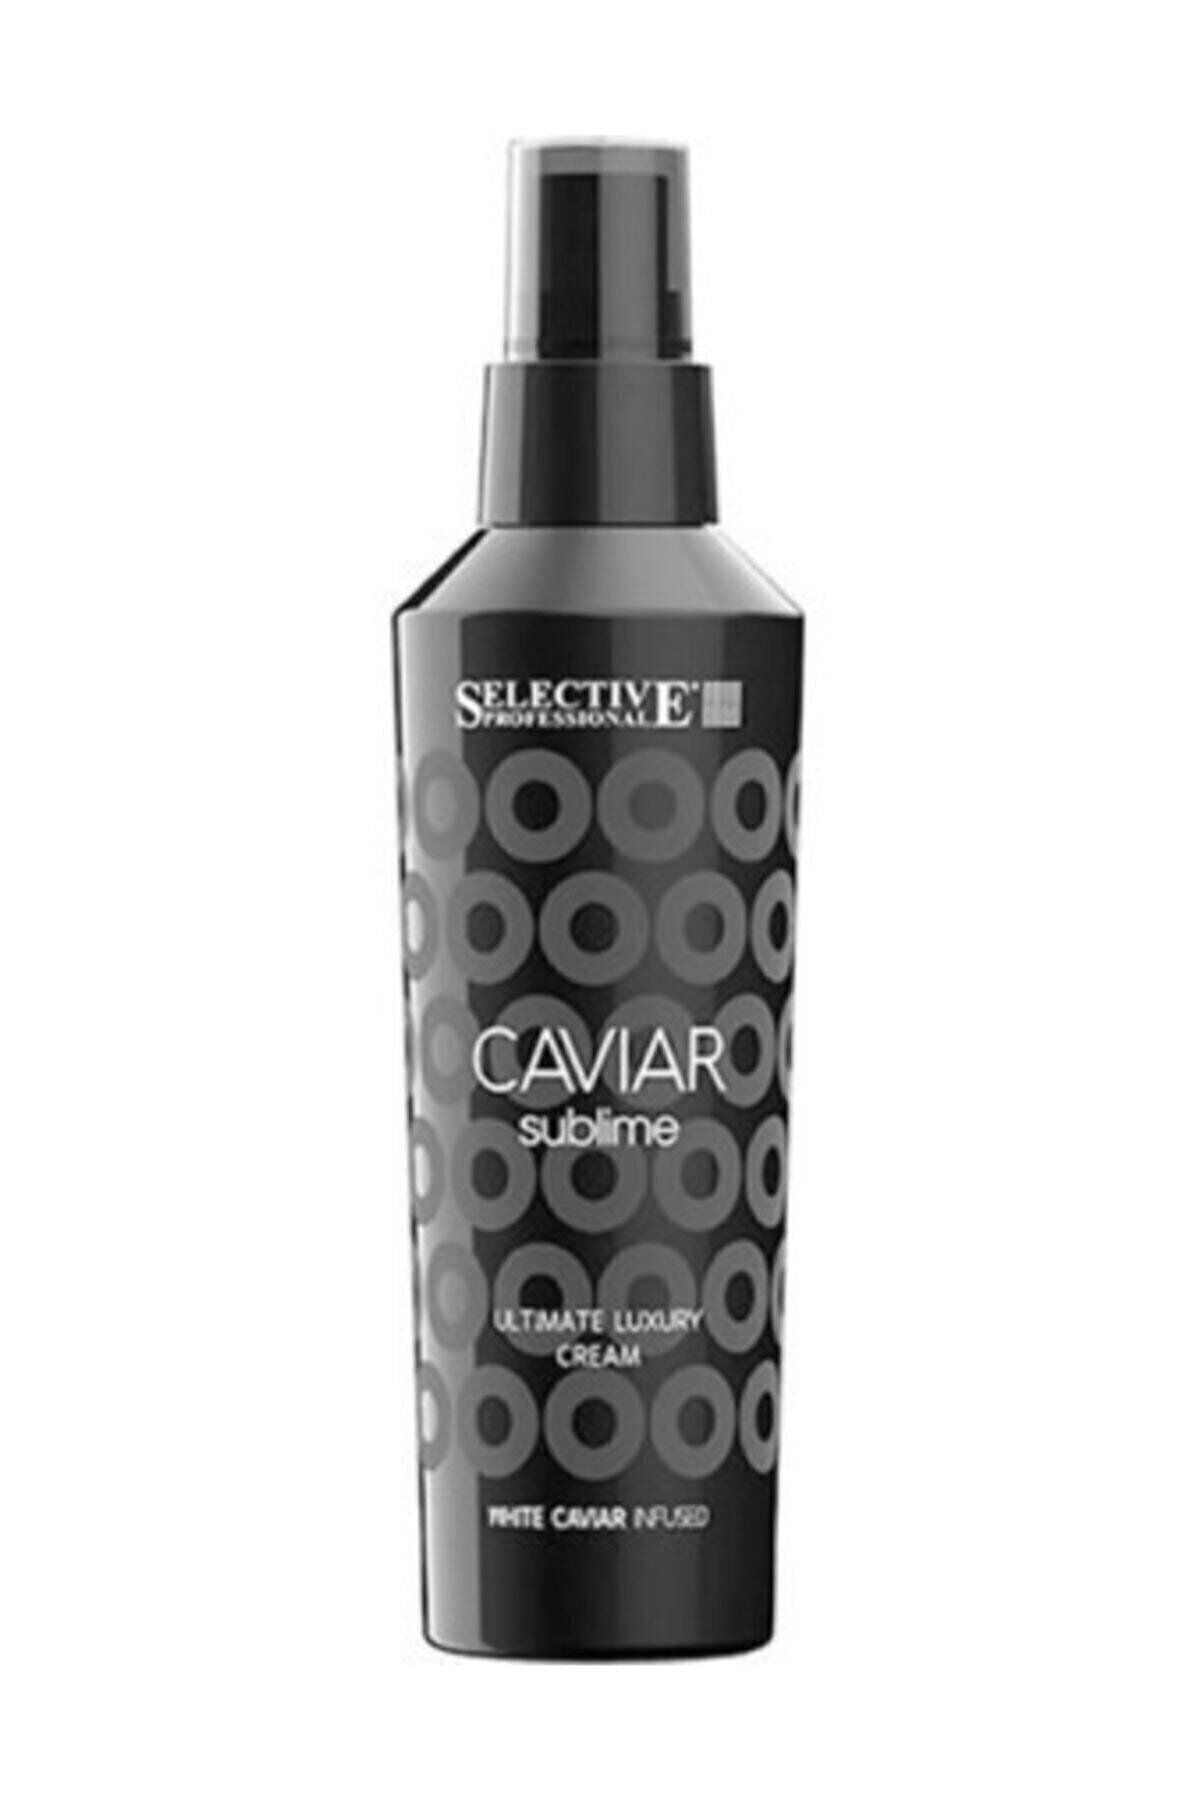 Selective Caviar Sublime Ultimate Luxury Cream Durulanmayan Saç Alyaonlıne.60